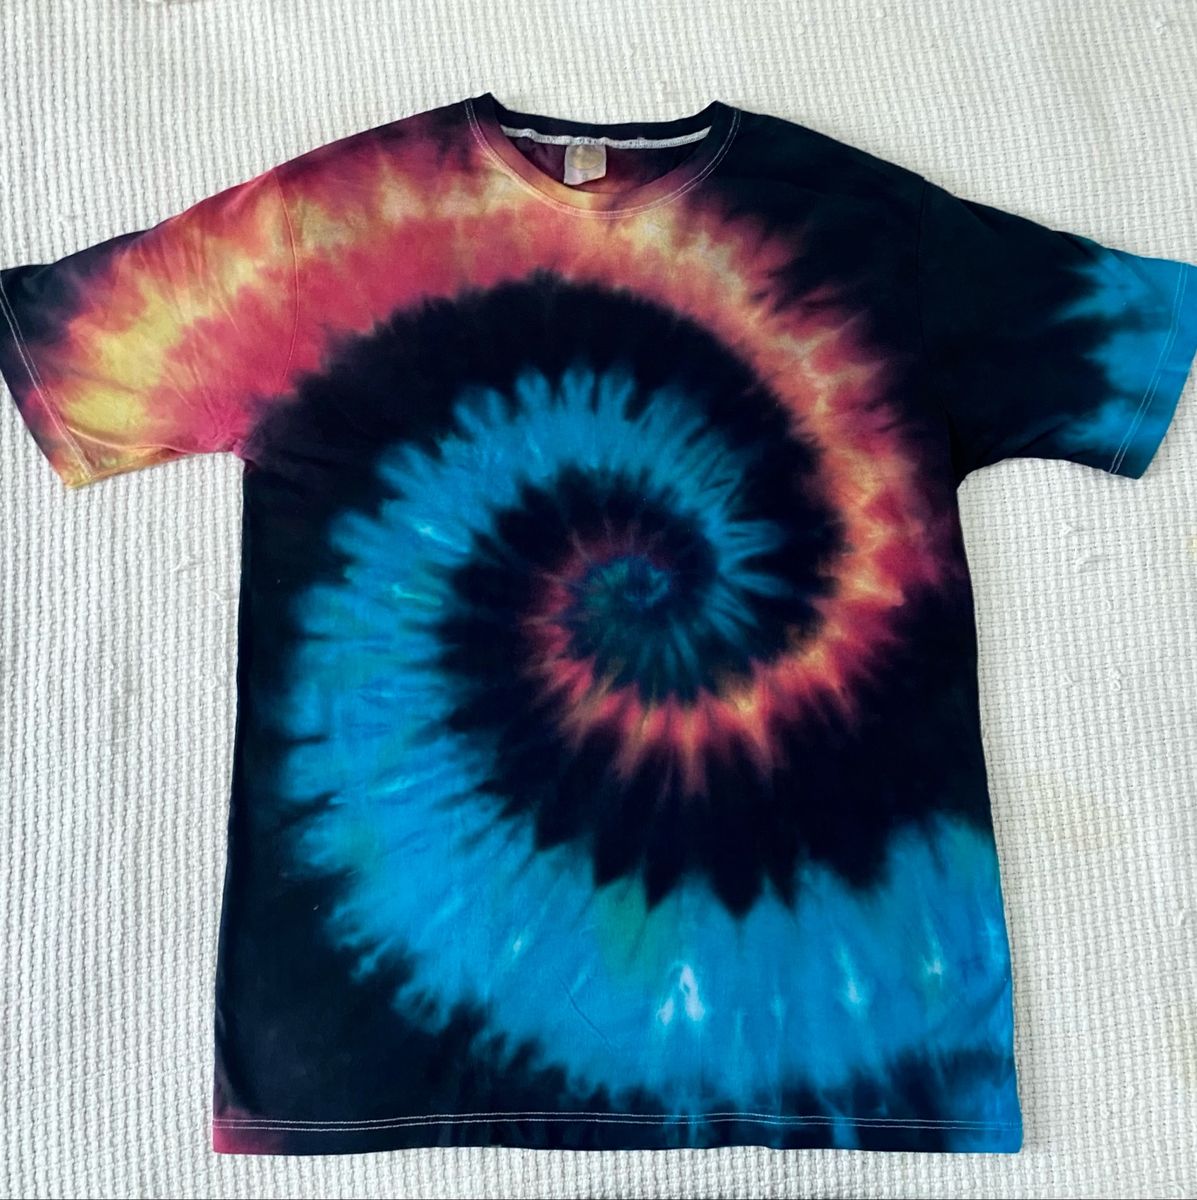 Camiseta Tie Dye Spiral